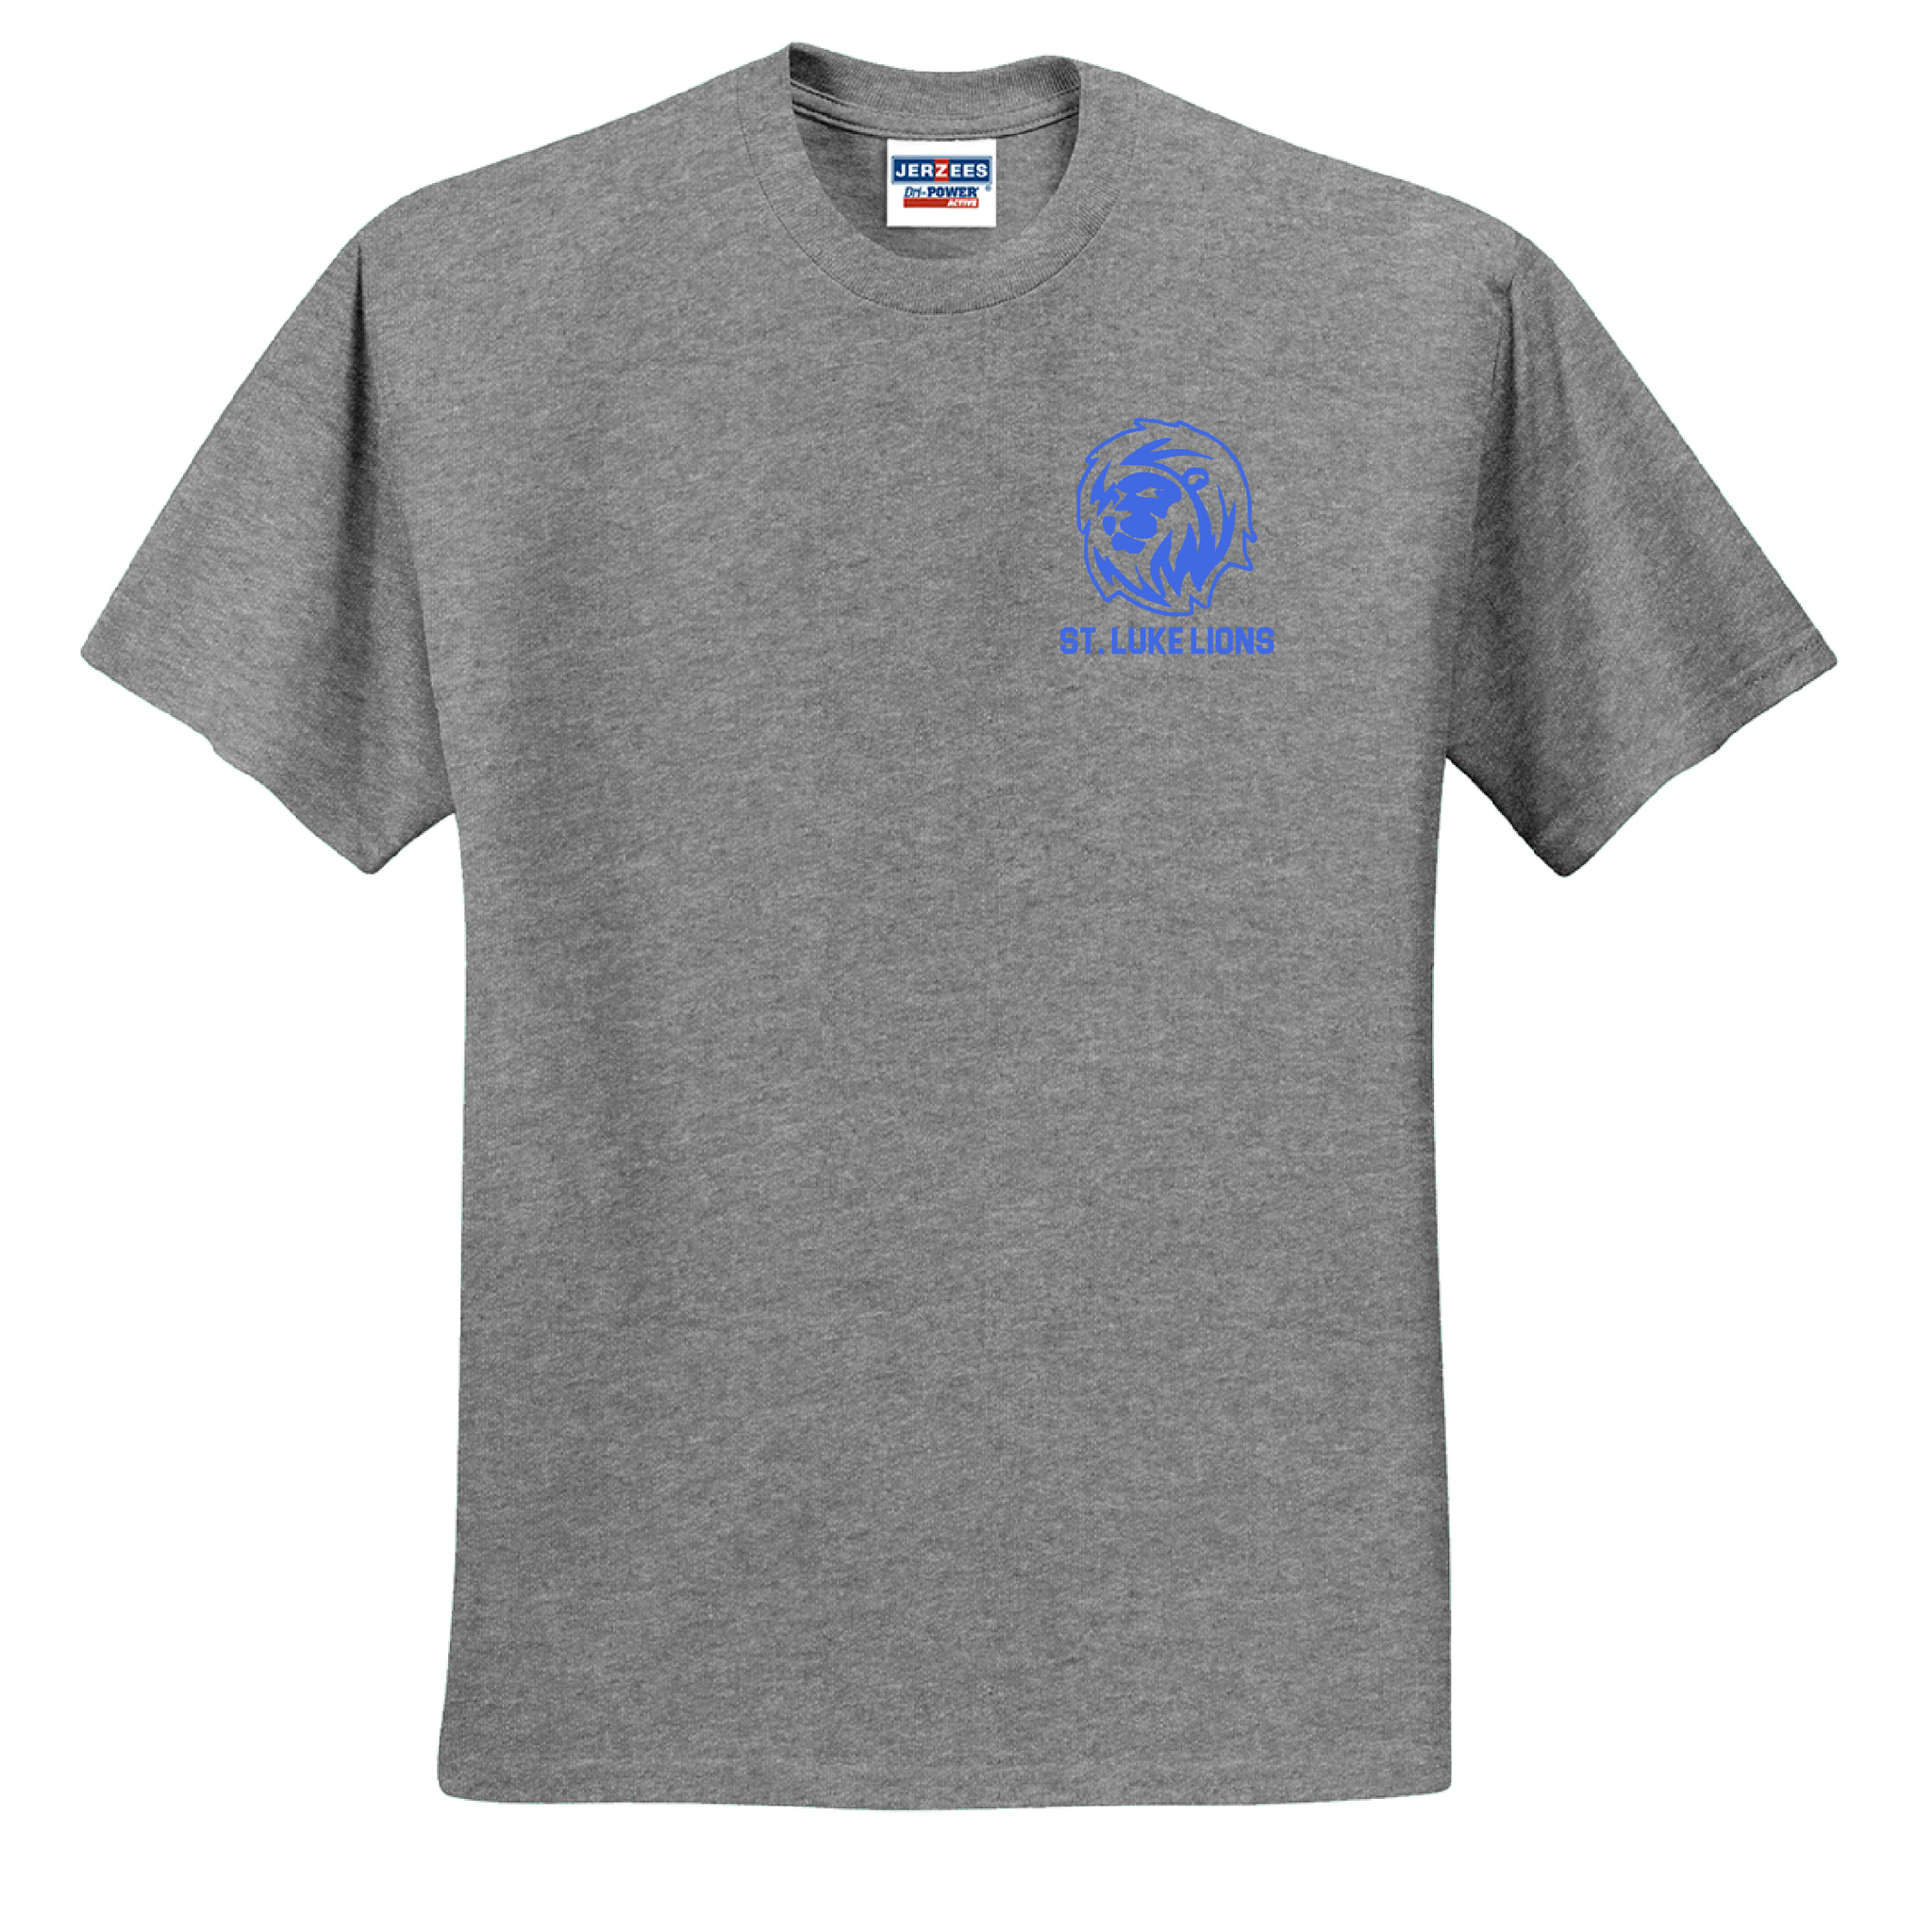 St. Luke T-Shirt